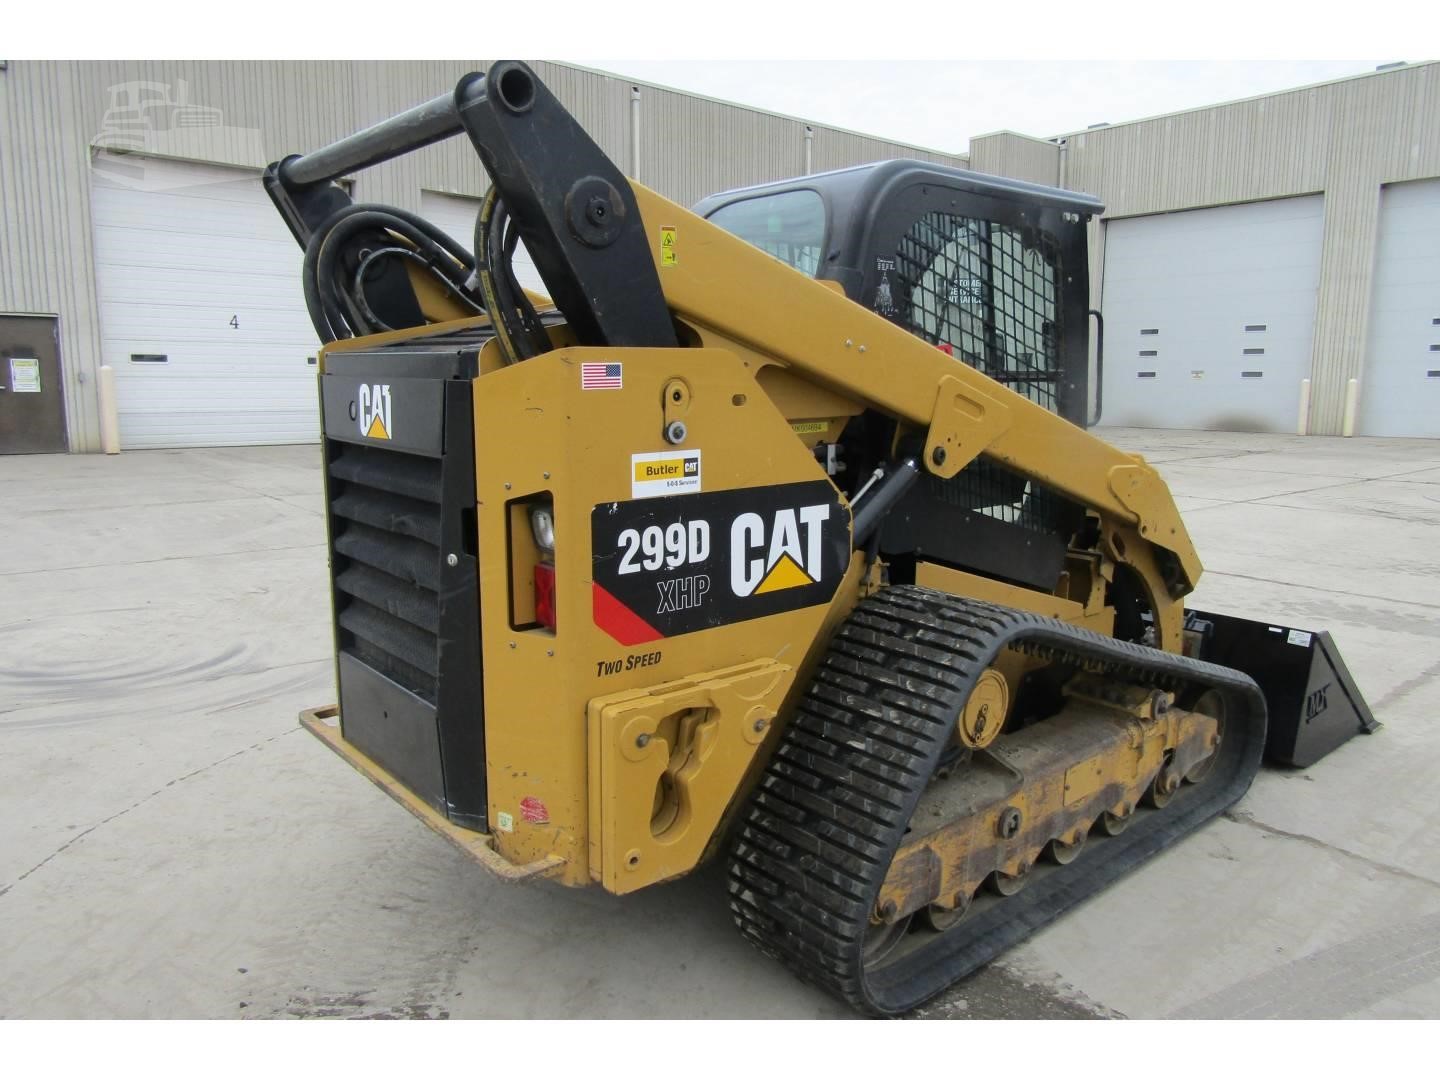 2014 CAT 299D For Sale In Fargo, North Dakota | MachineryTrader.com